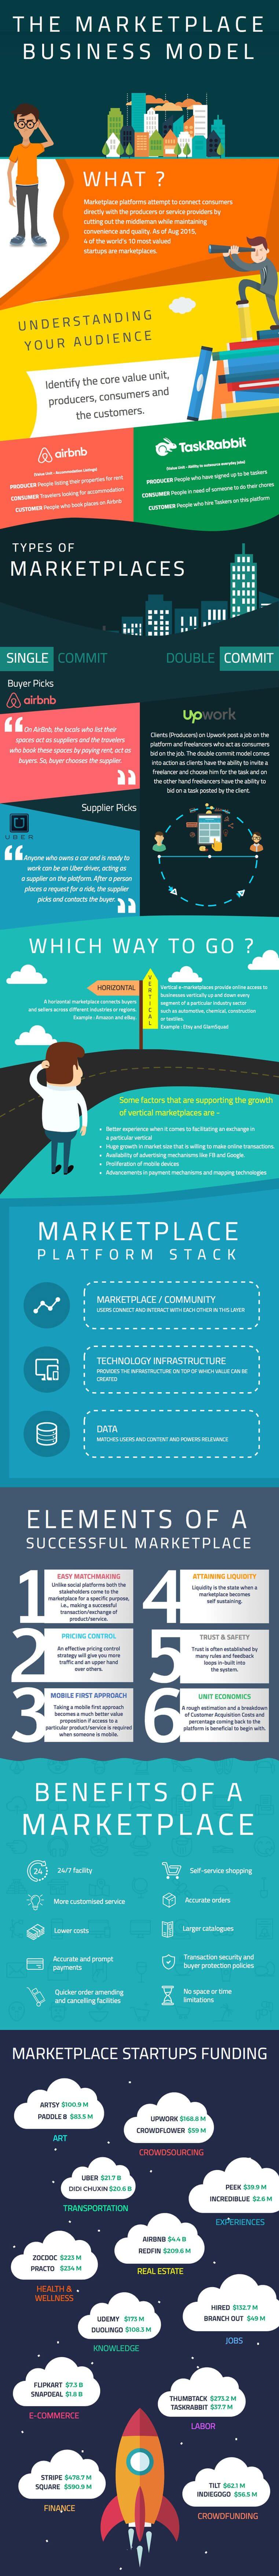 Marketplace Business Model - Infographic - Yelo